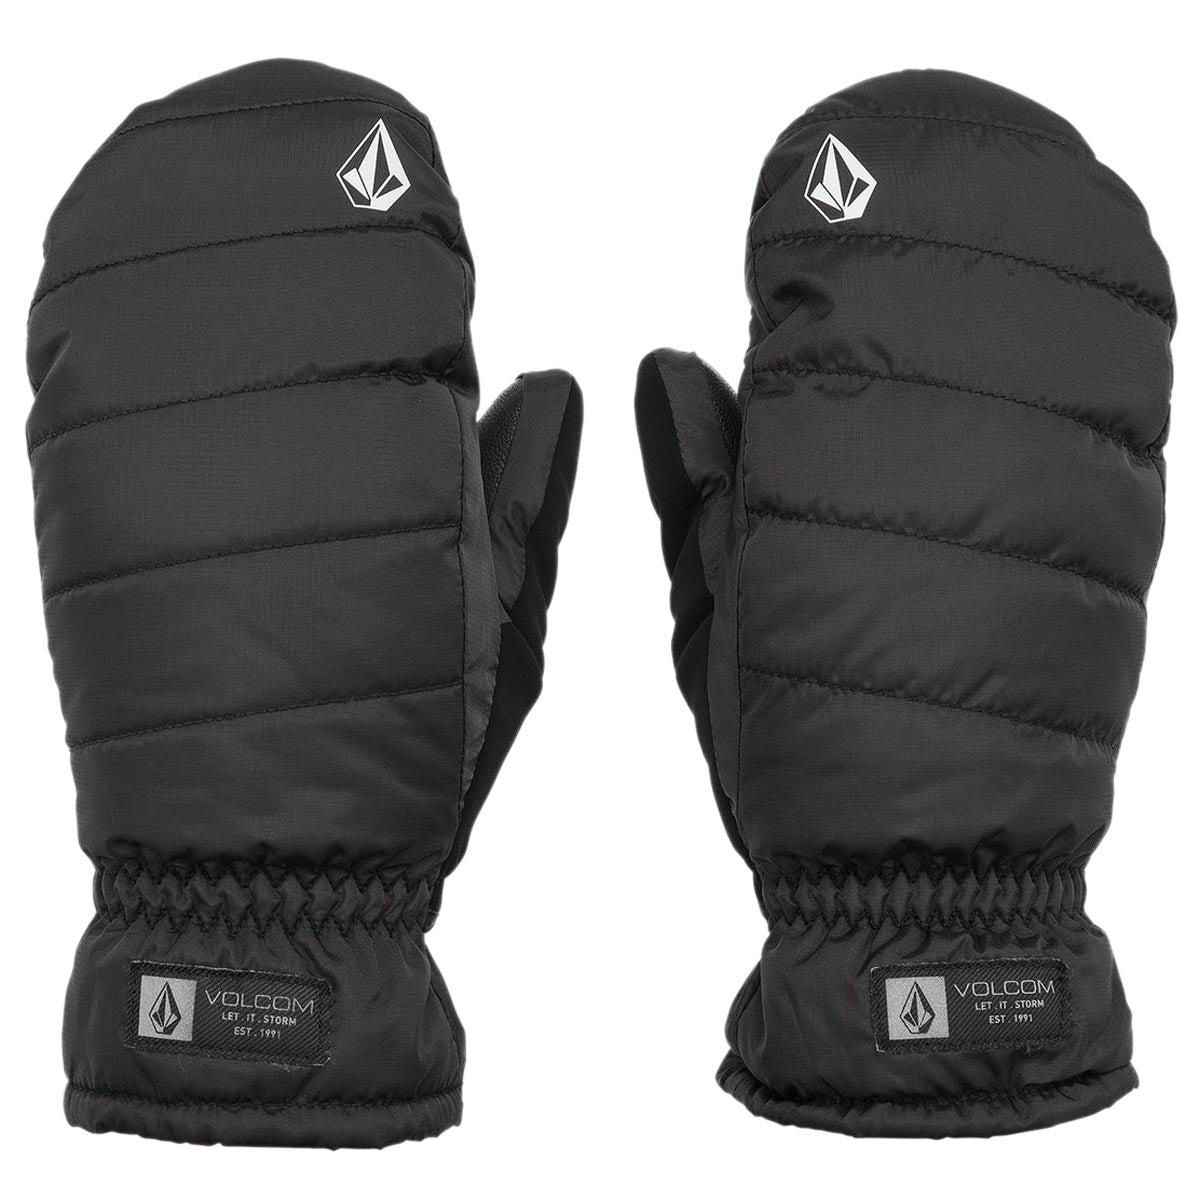 Volcom Womens Puff Puff Mitt Snowboard Gloves - Black image 1